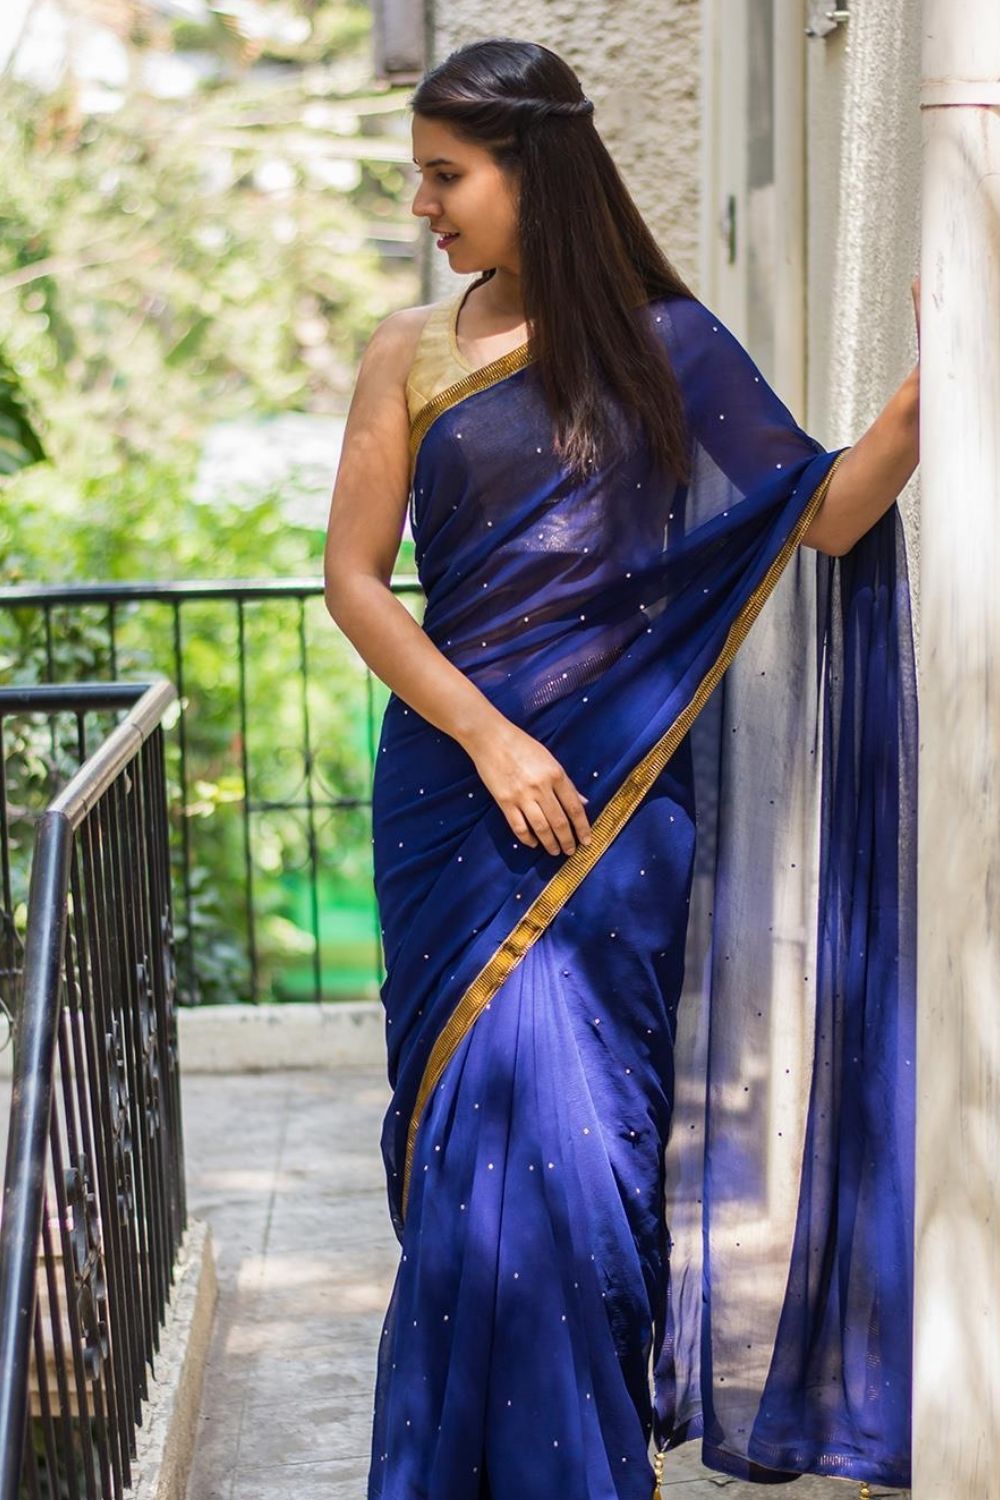 Buy Indian Dress Saree Royal Blue Georgette Latest Sarees U Neck